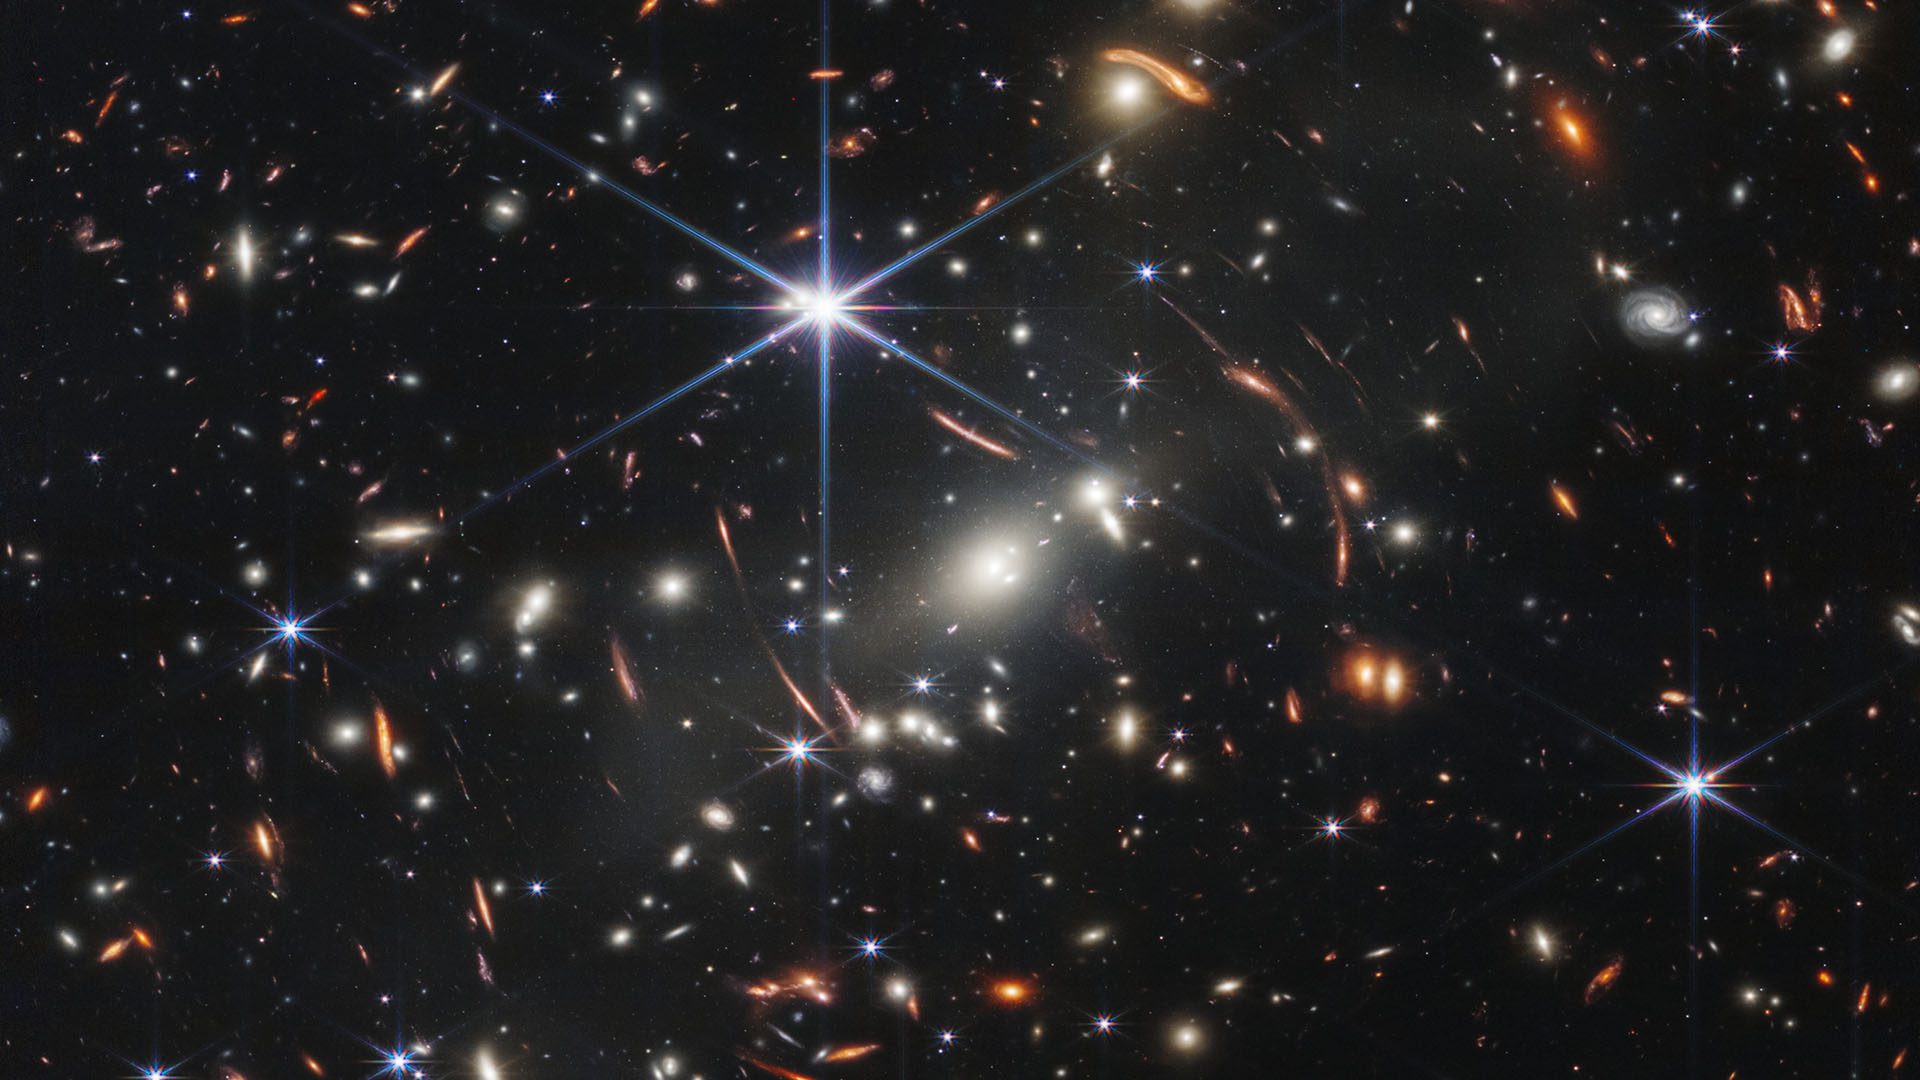 SMACS 0723: James Webb Telescope Images